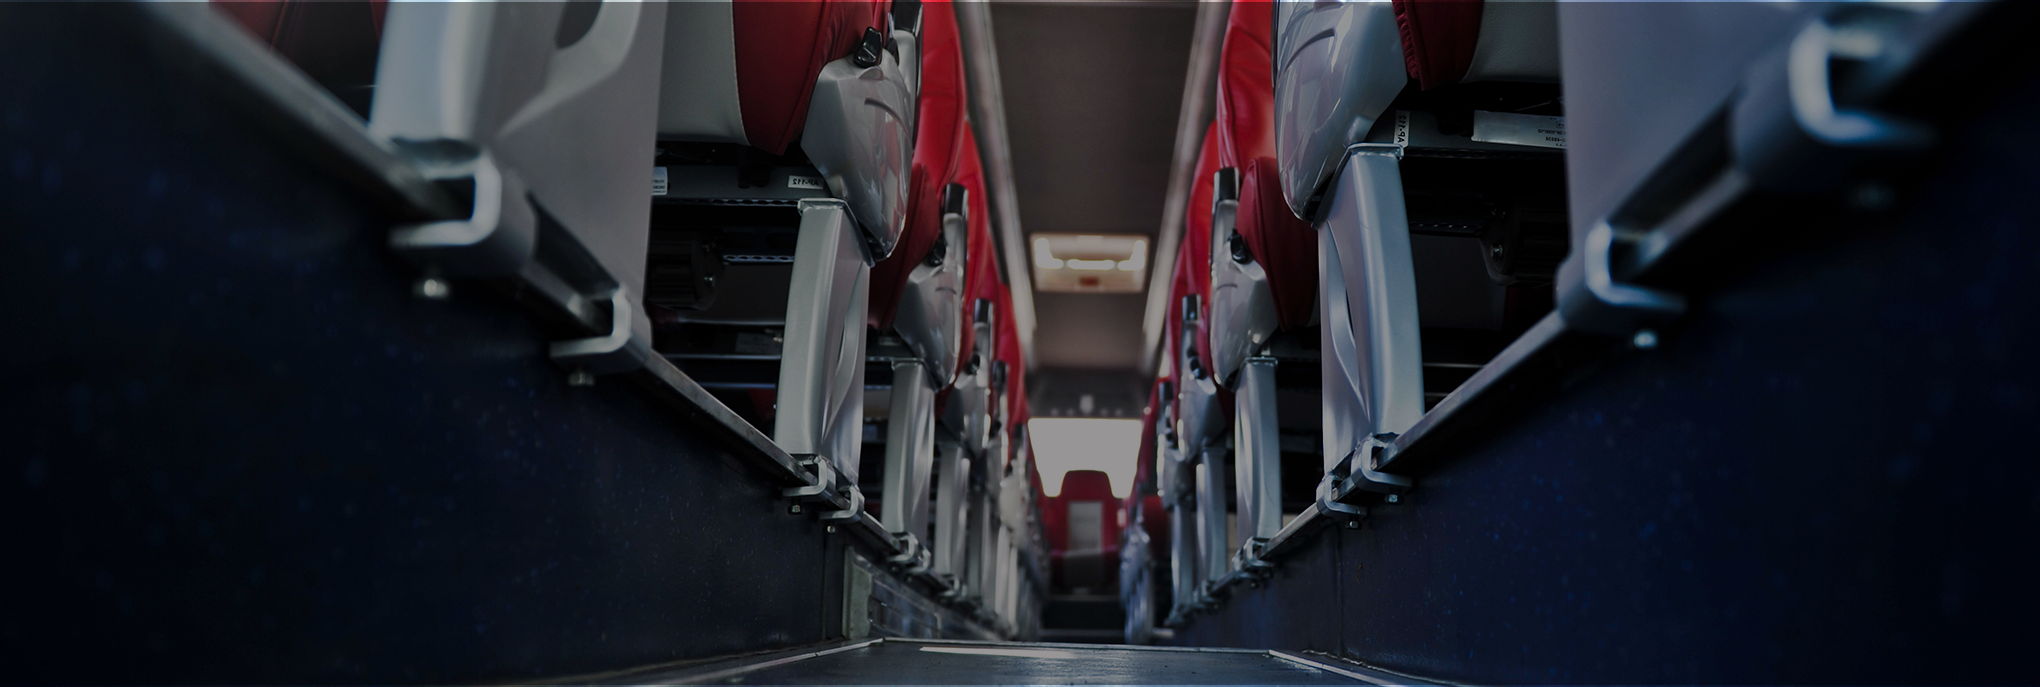 Sustainable Transportation Commuter Bus seats